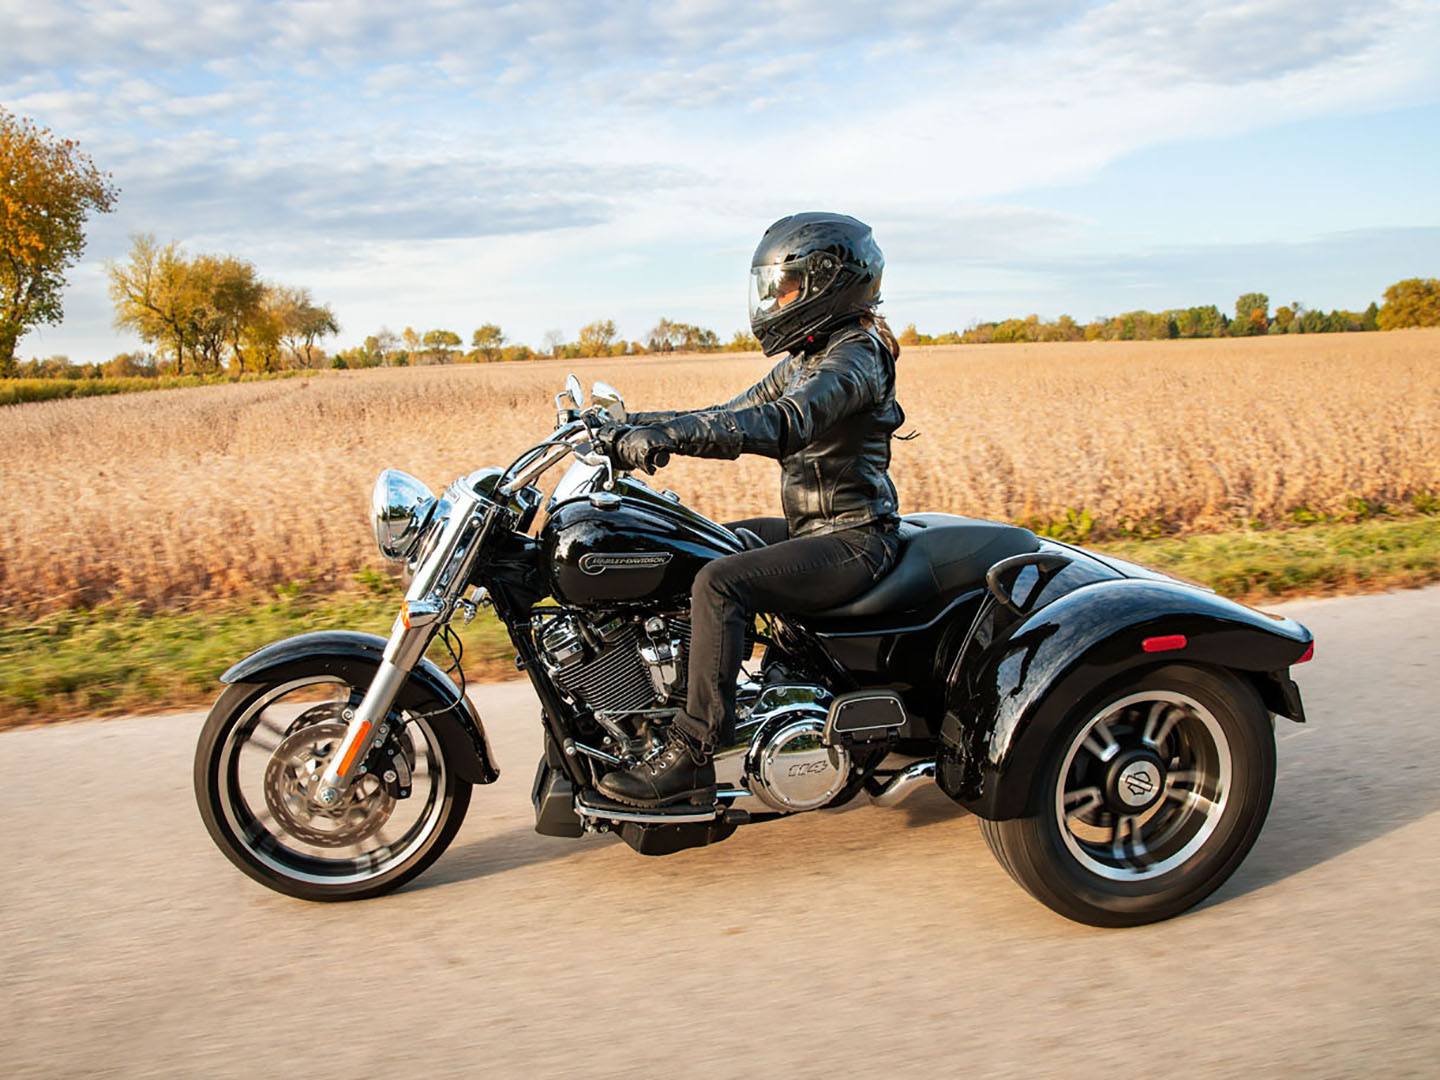 2021 Harley-Davidson Freewheeler® in Syracuse, New York - Photo 8